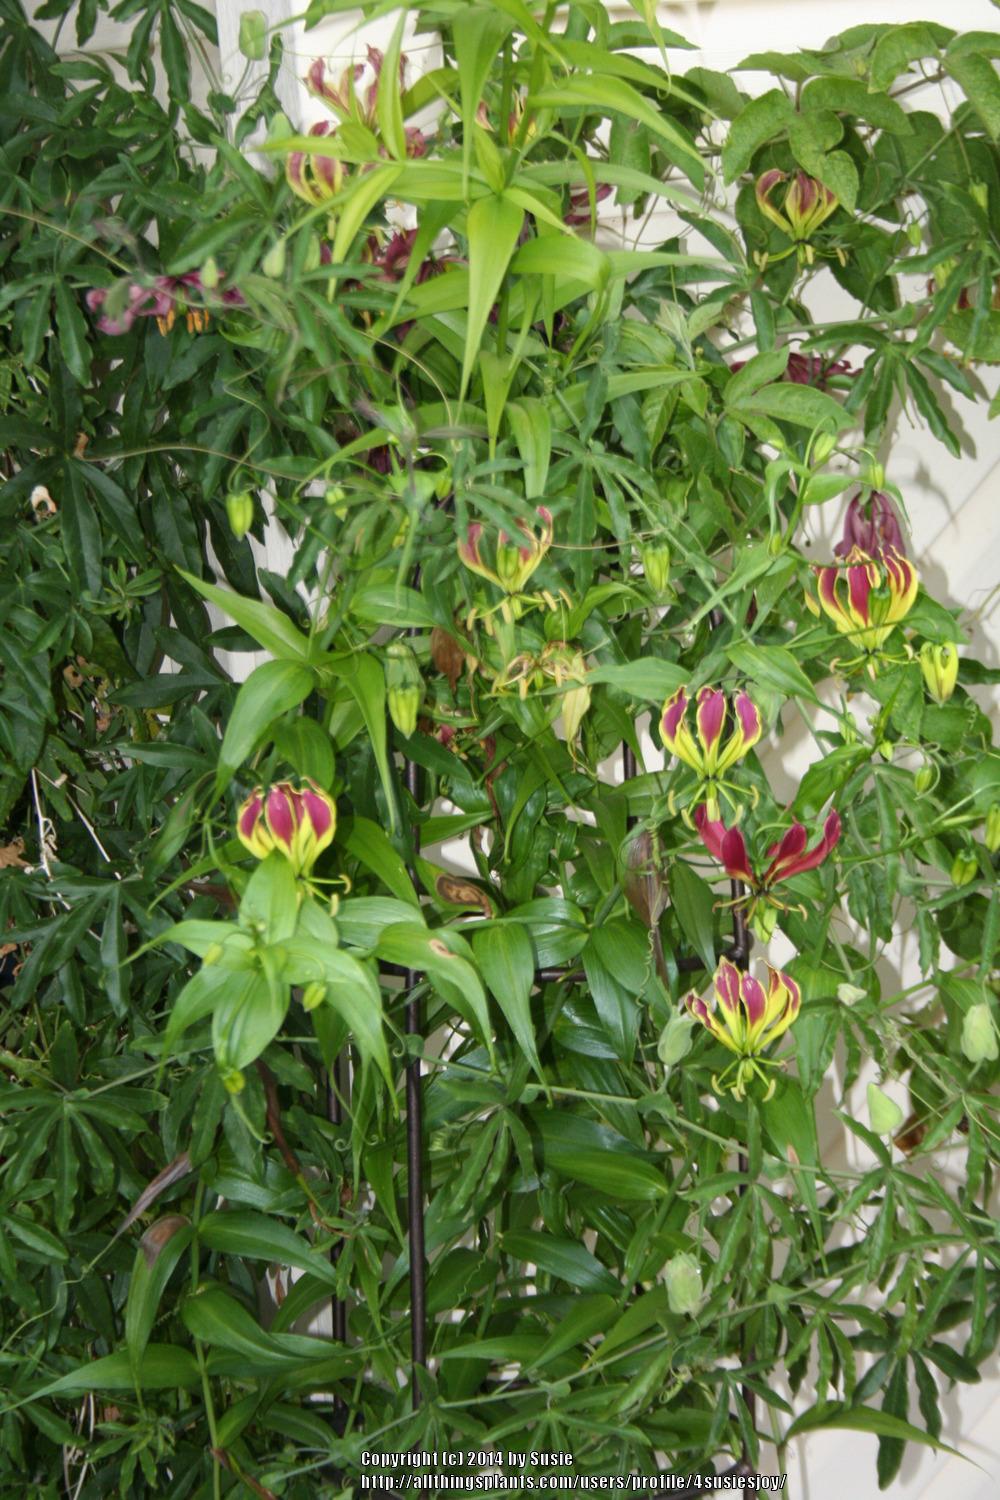 Photo of Gloriosa Lily (Gloriosa carsonii) uploaded by 4susiesjoy